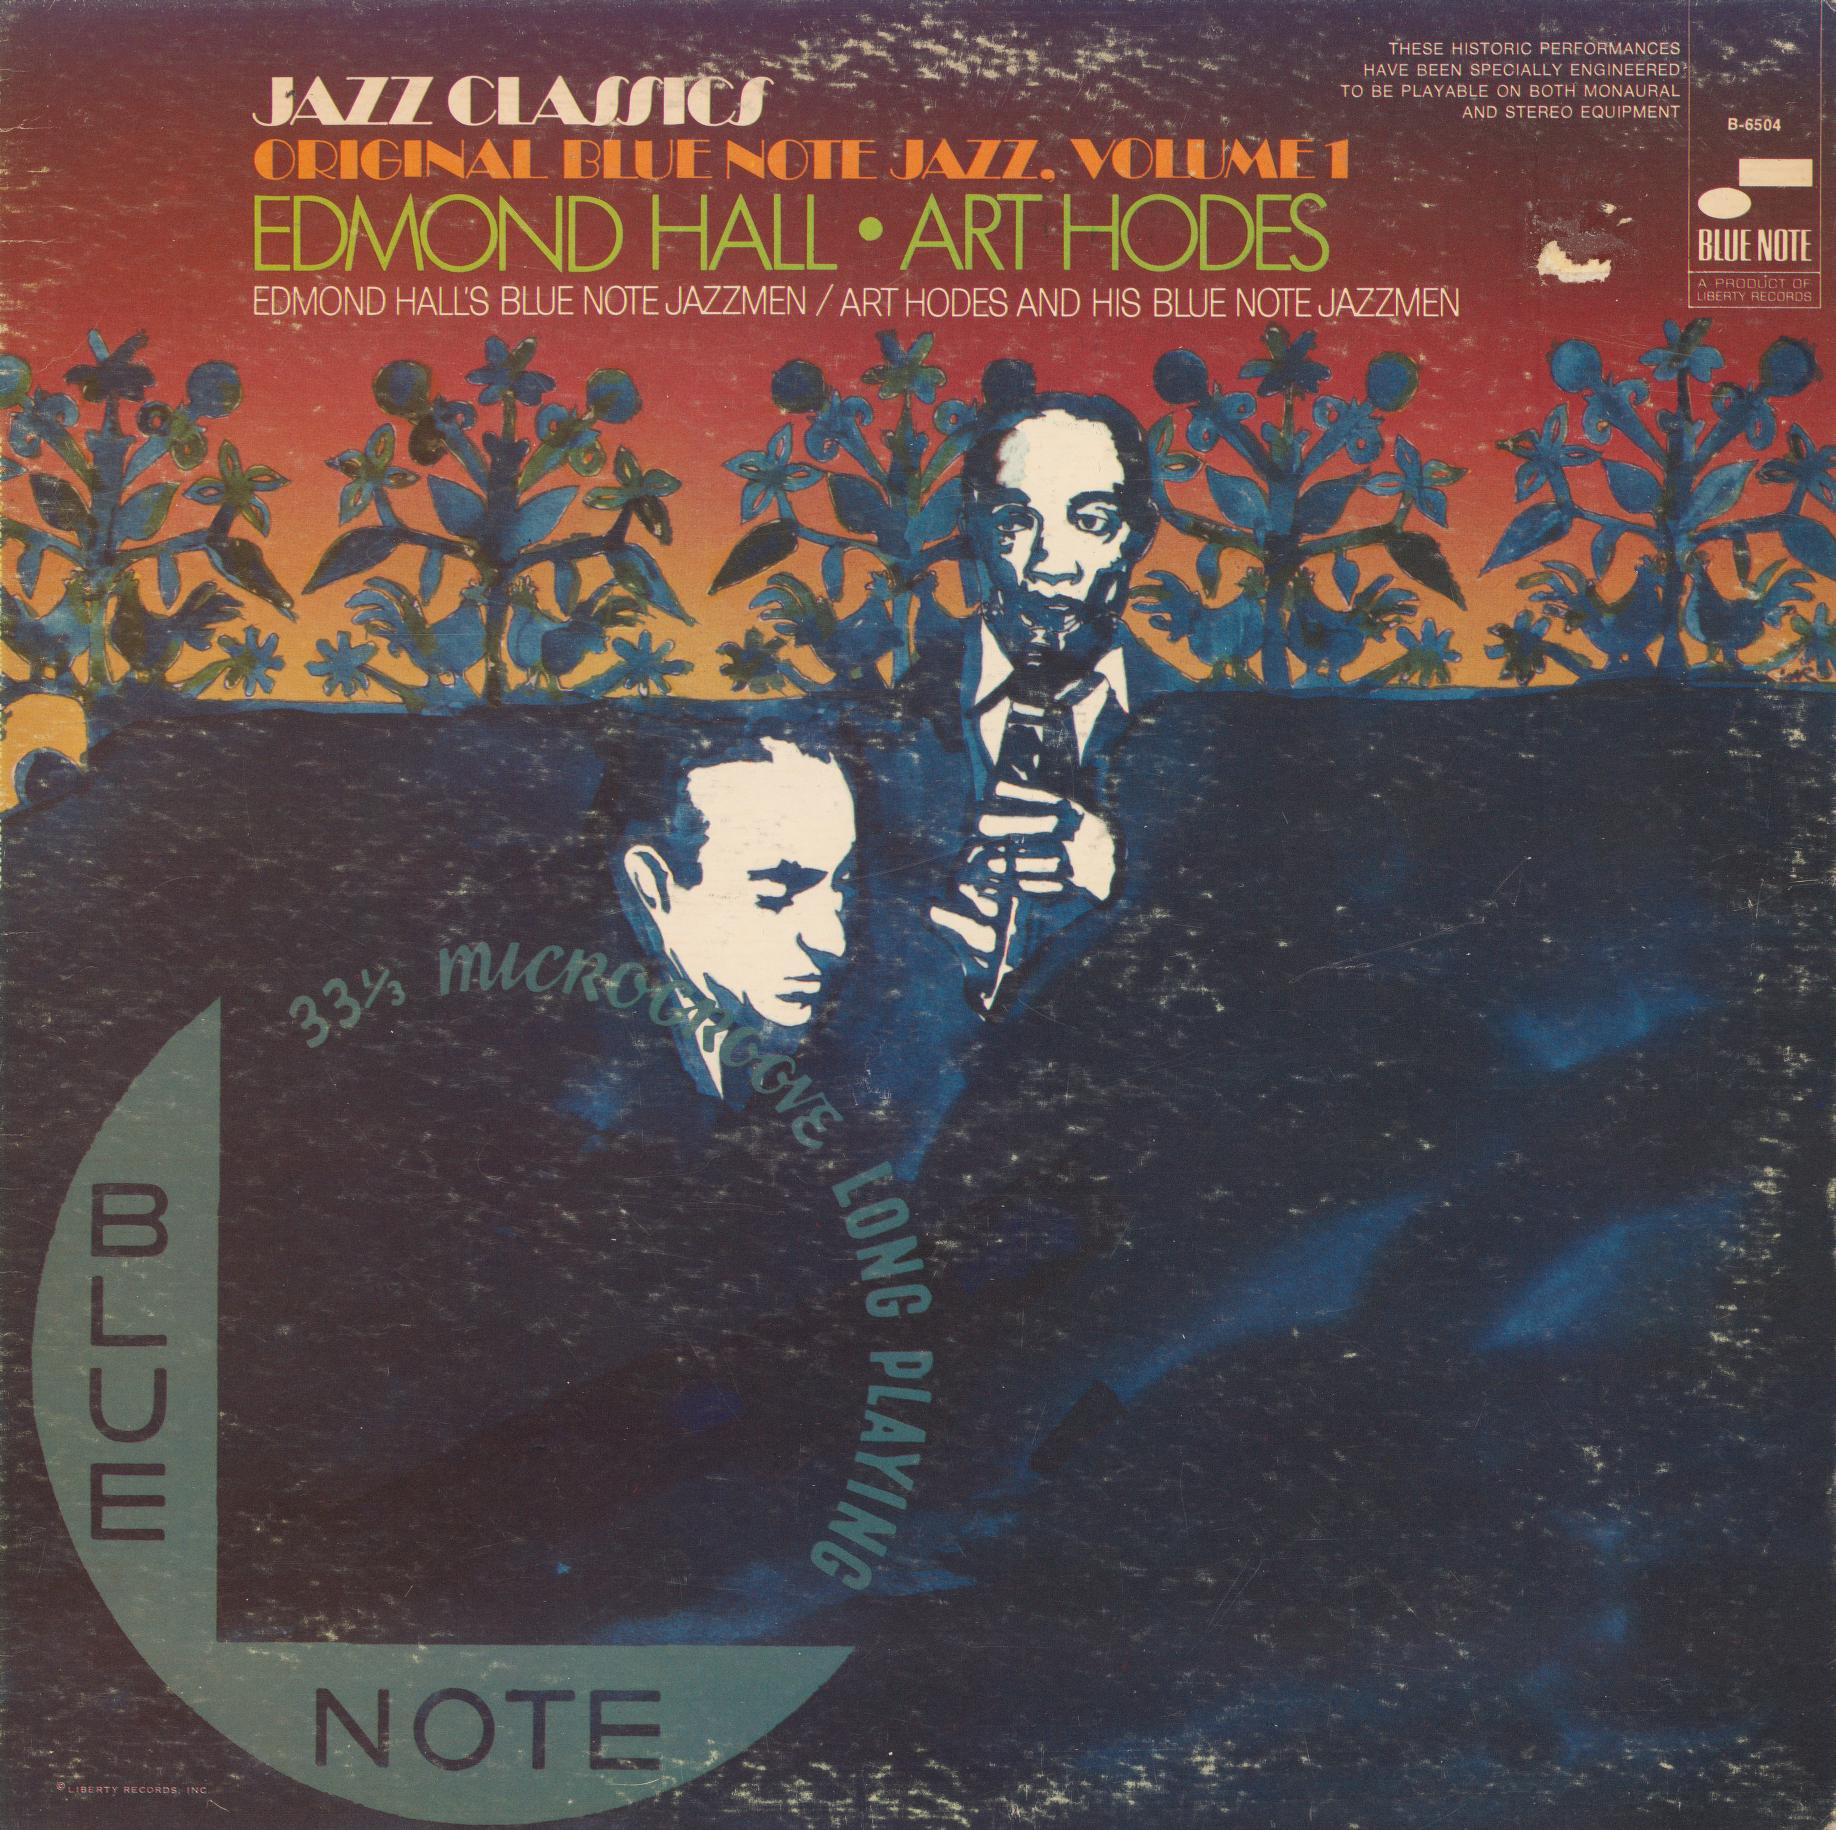 Original Blue Note Jazz. Volume 1 : Edmond Hall : Free Download 